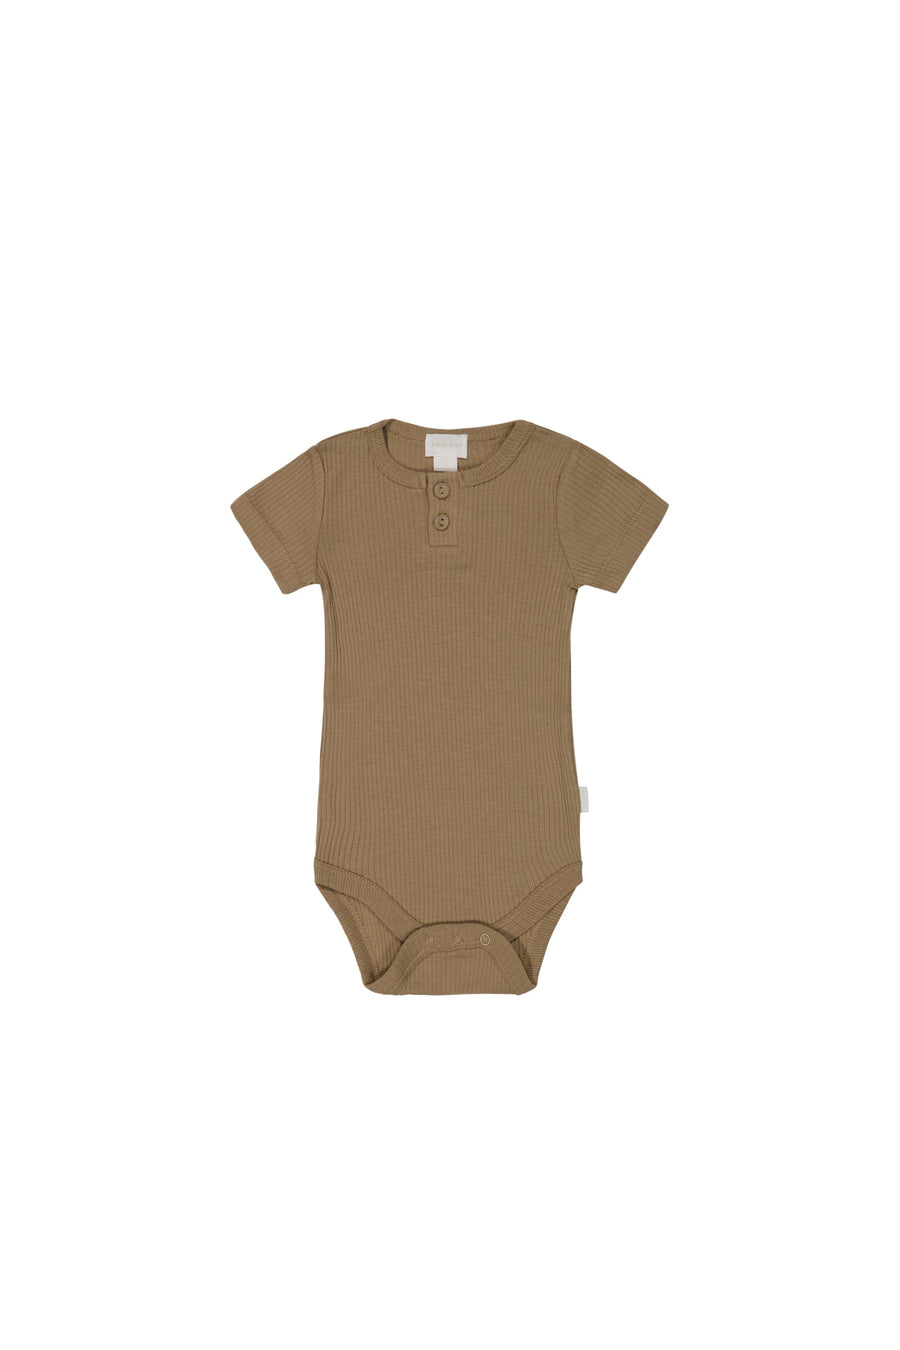 Organic Cotton Modal Darcy Rib Tee Bodysuit - Pecan Childrens Bodysuit from Jamie Kay USA